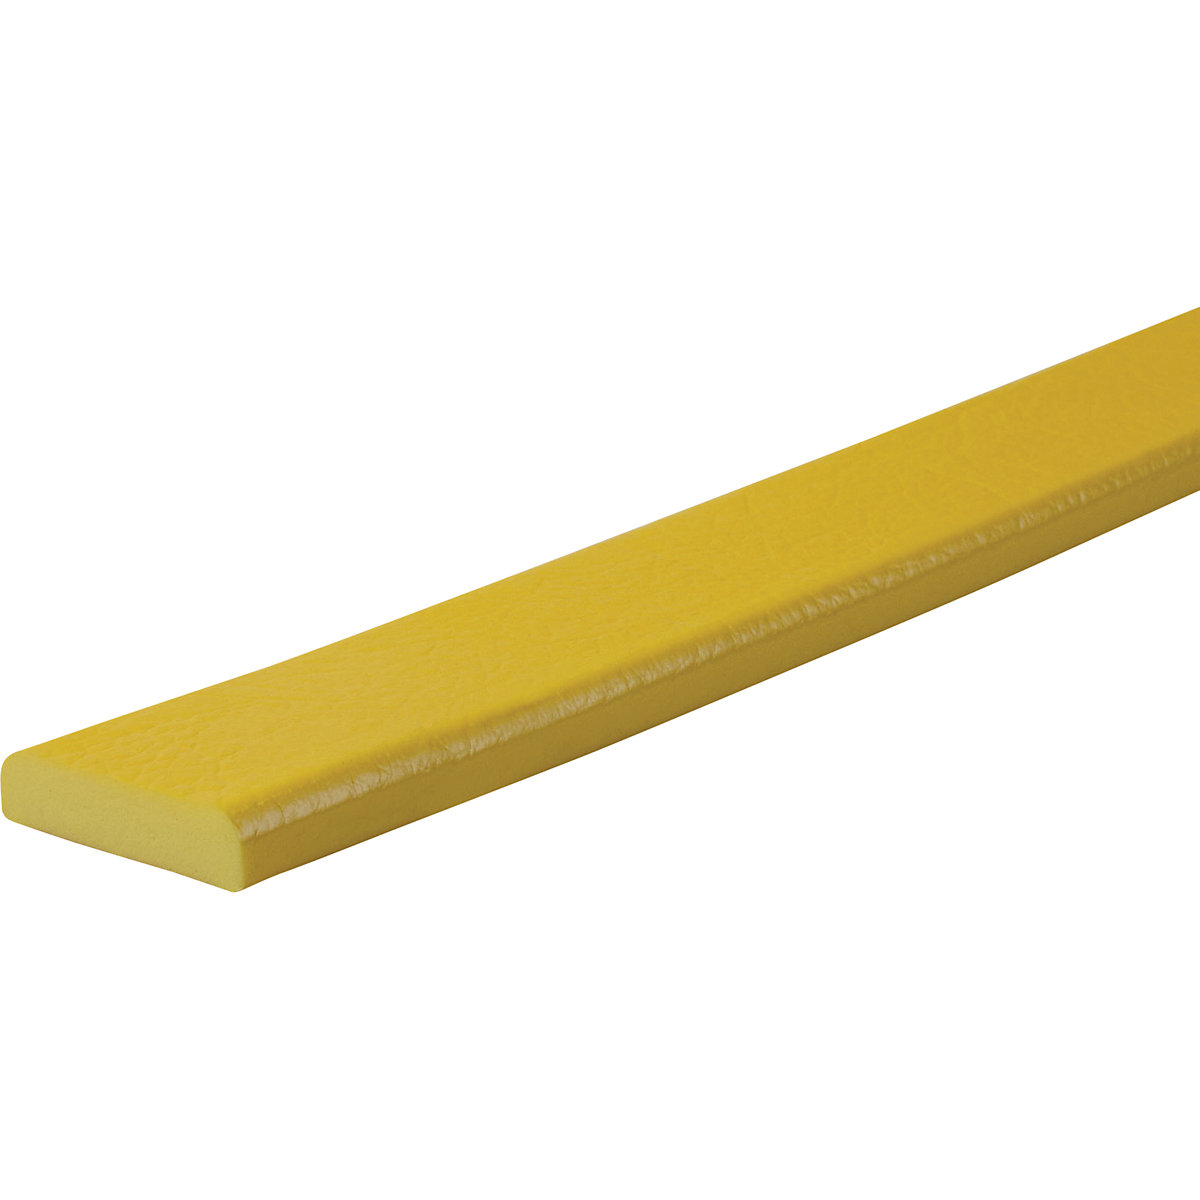 Knuffi® surface protection – SHG, type F, 1 m piece, yellow-39